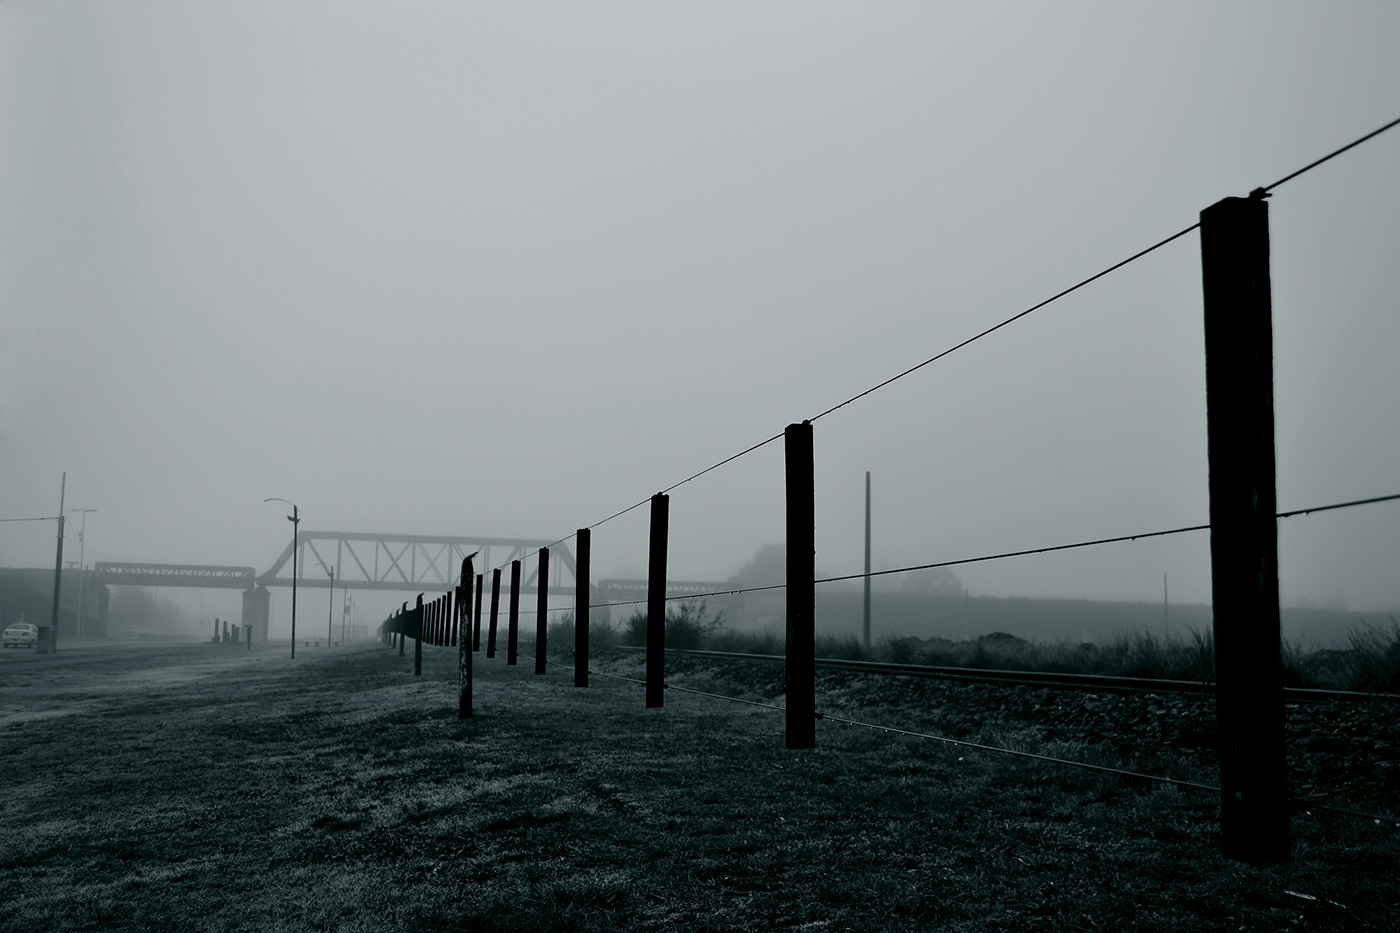 Fotos Fotografia niebla neblina blanco negro paisaje Landscape fog photo black and white wagon